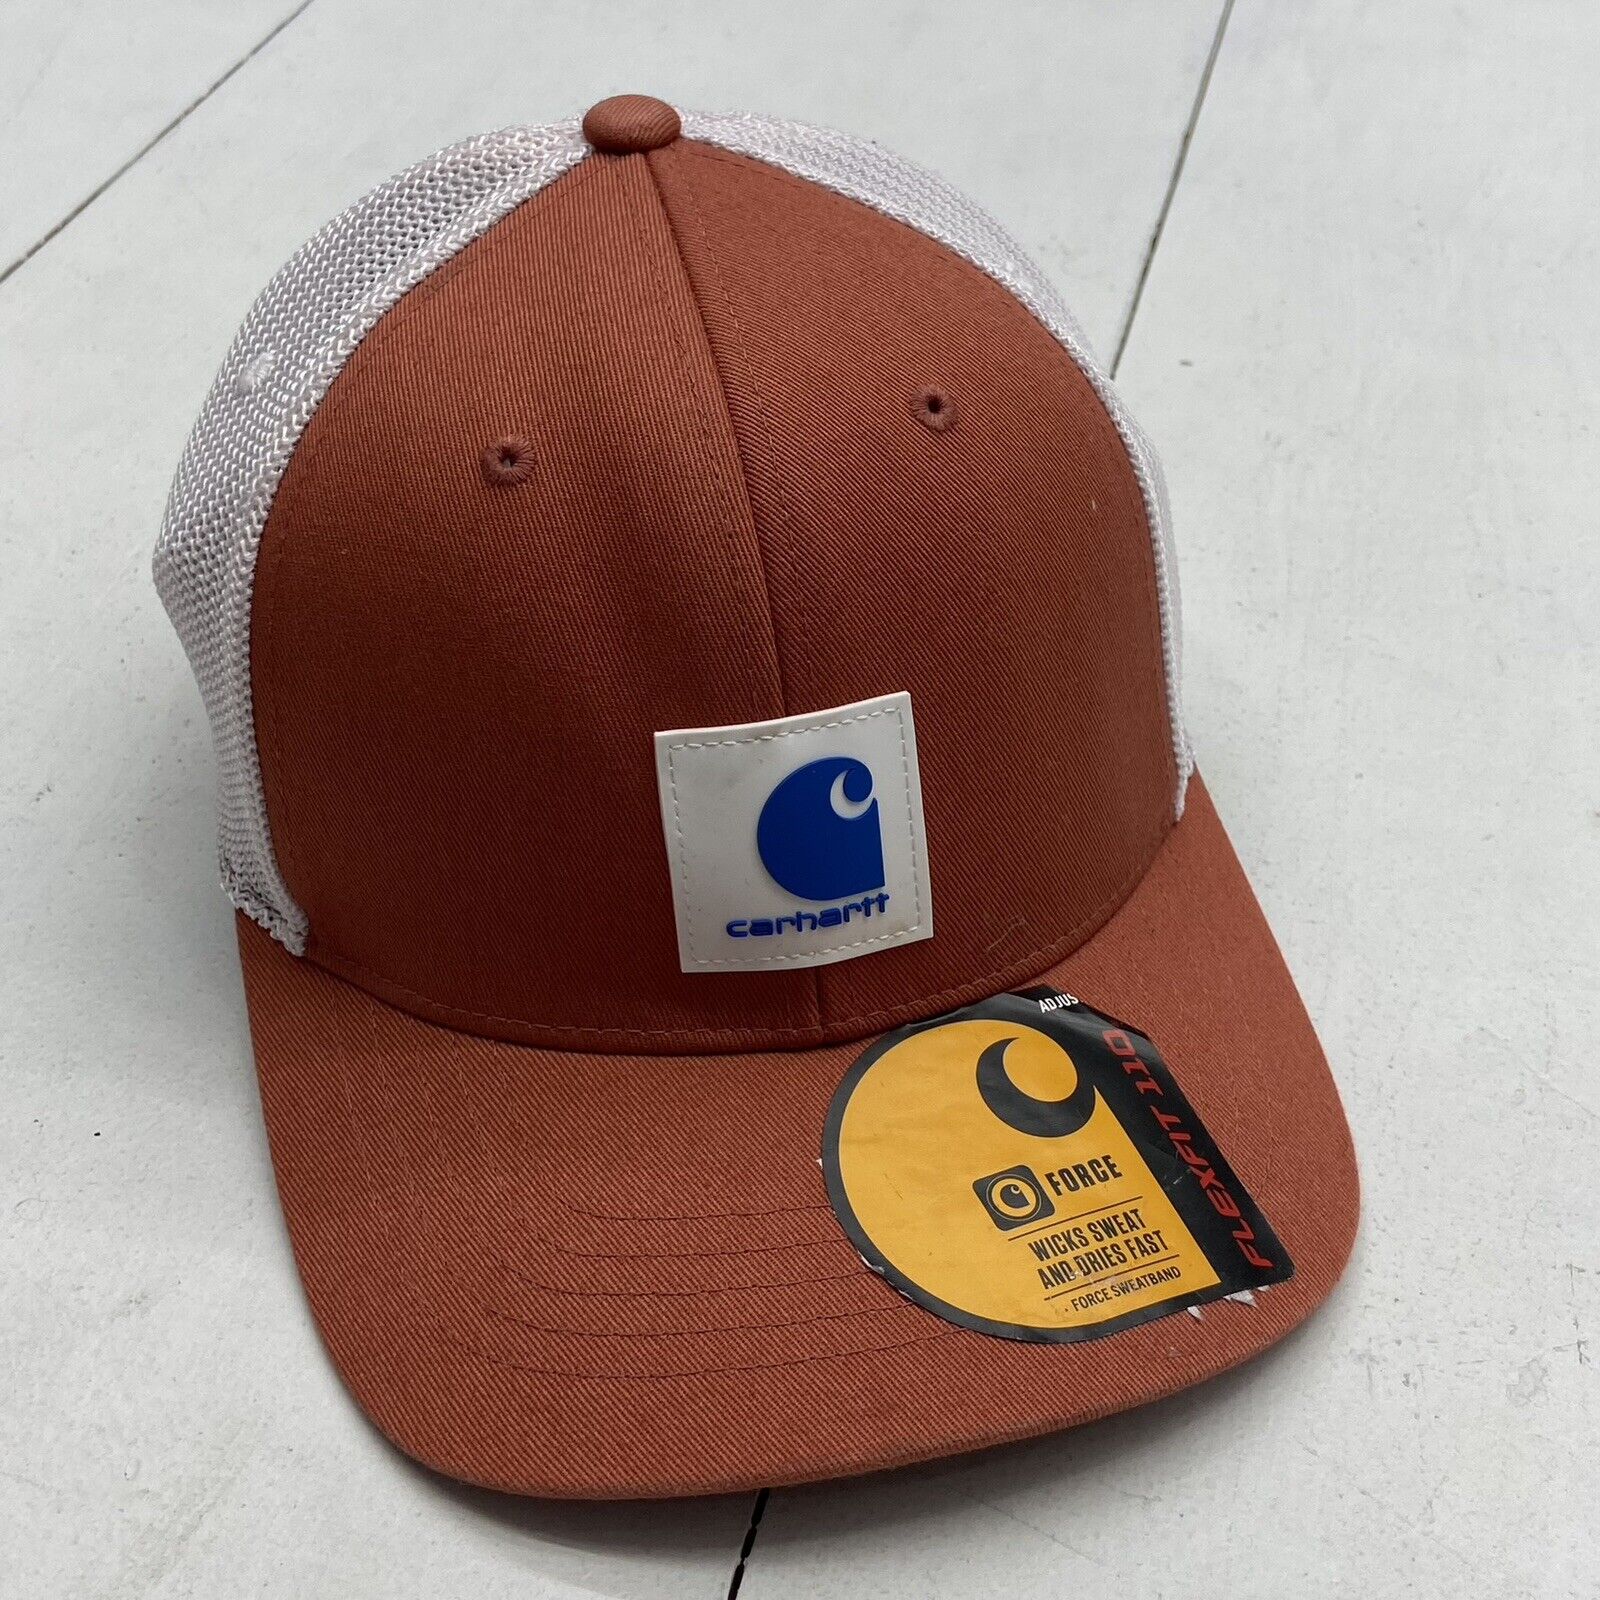 Carhartt Rust White Mesh Trucker Snapback Adjustable Hat Adult One Size Flex NEW